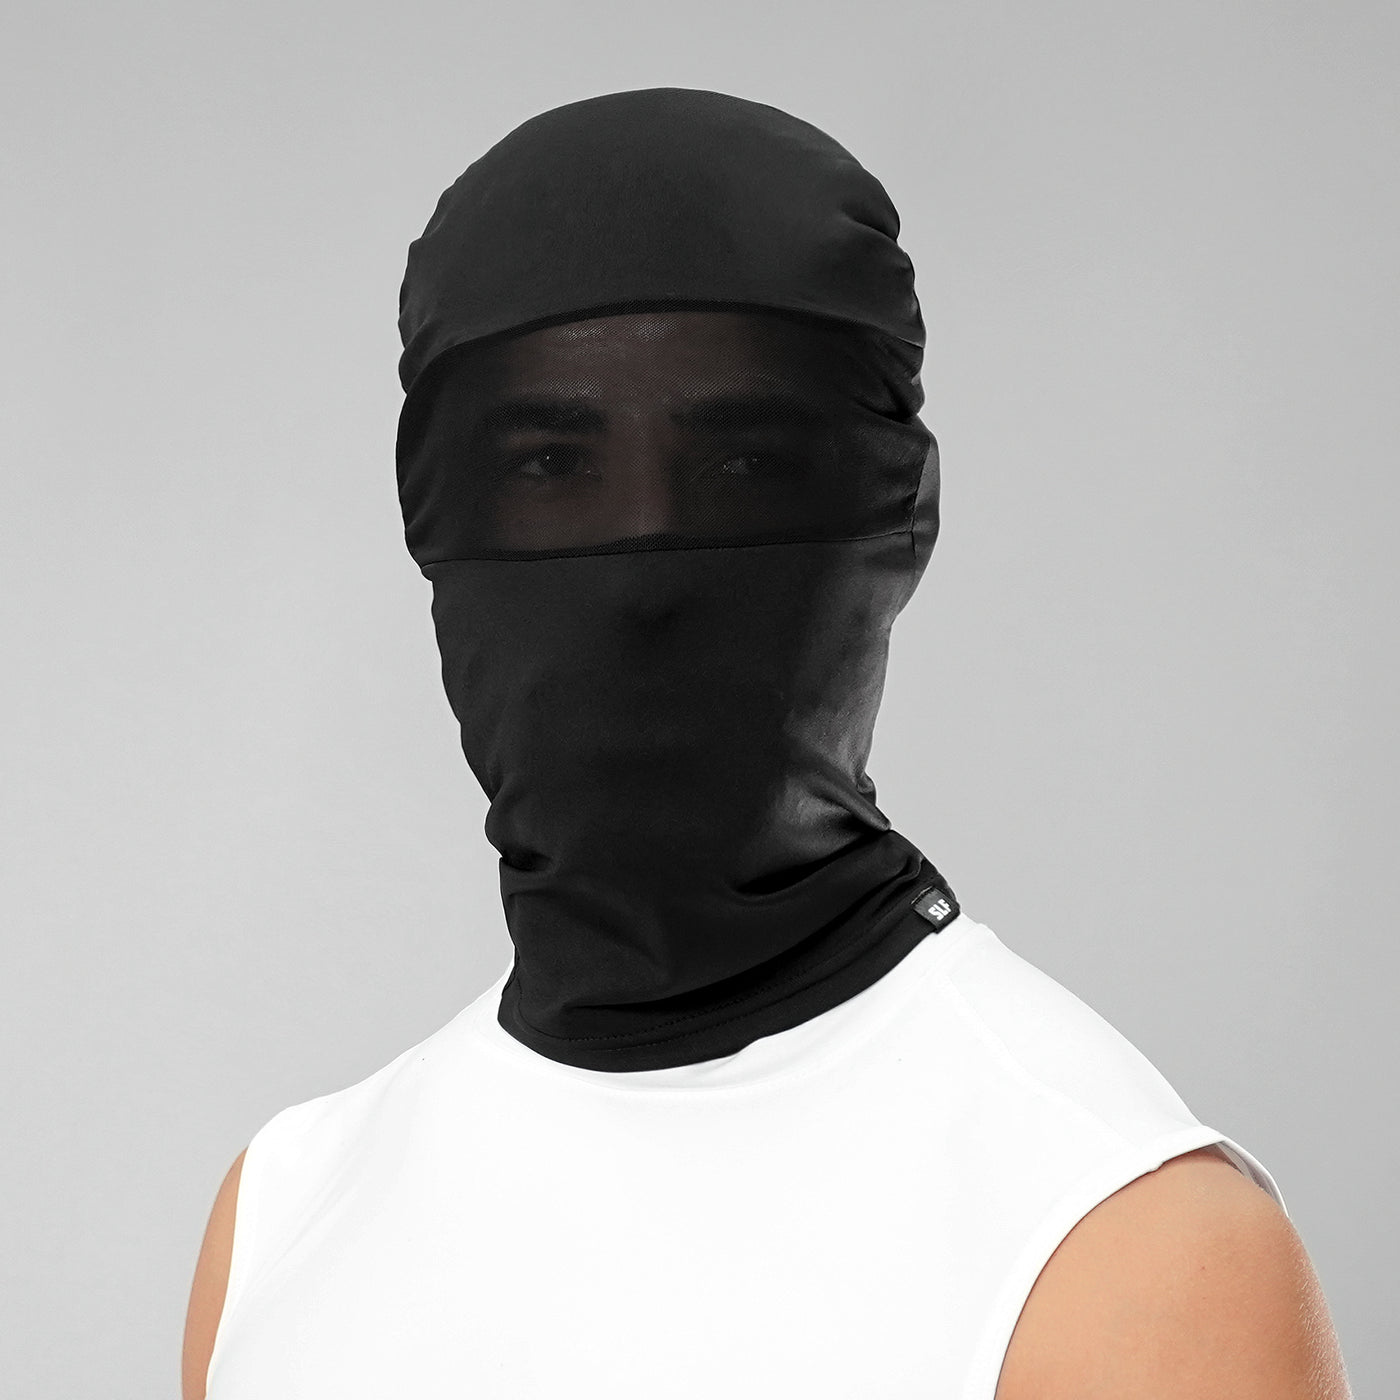 Basic Black Head Bag Mask